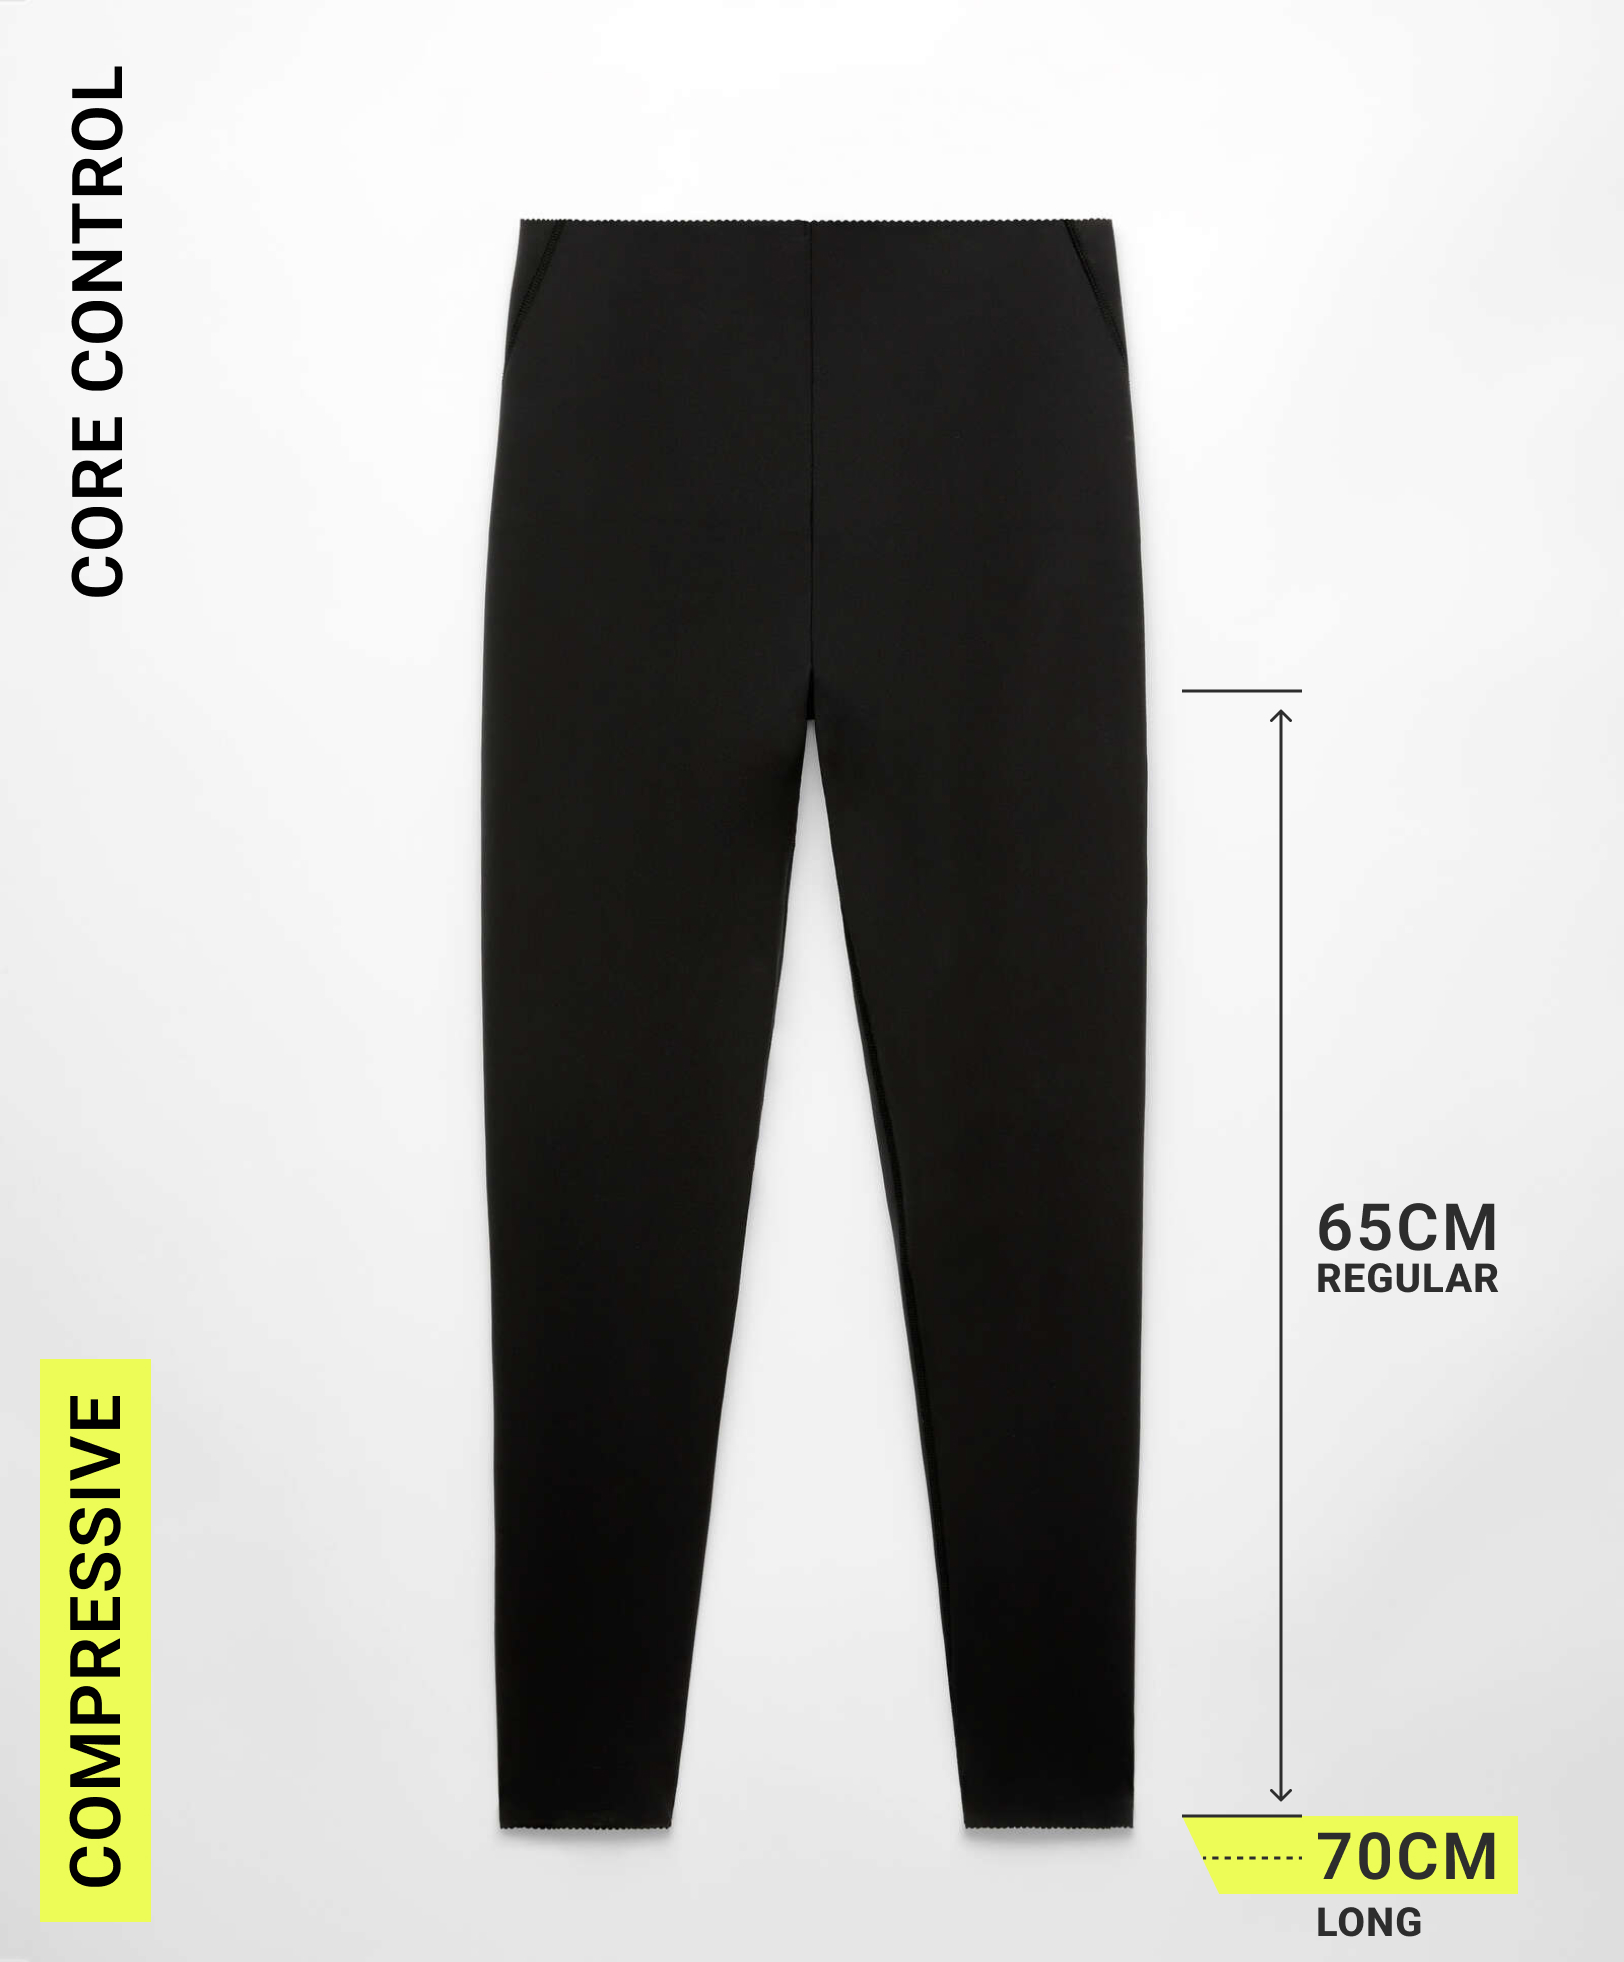 Compressive core control 65cm ankle-length leggings